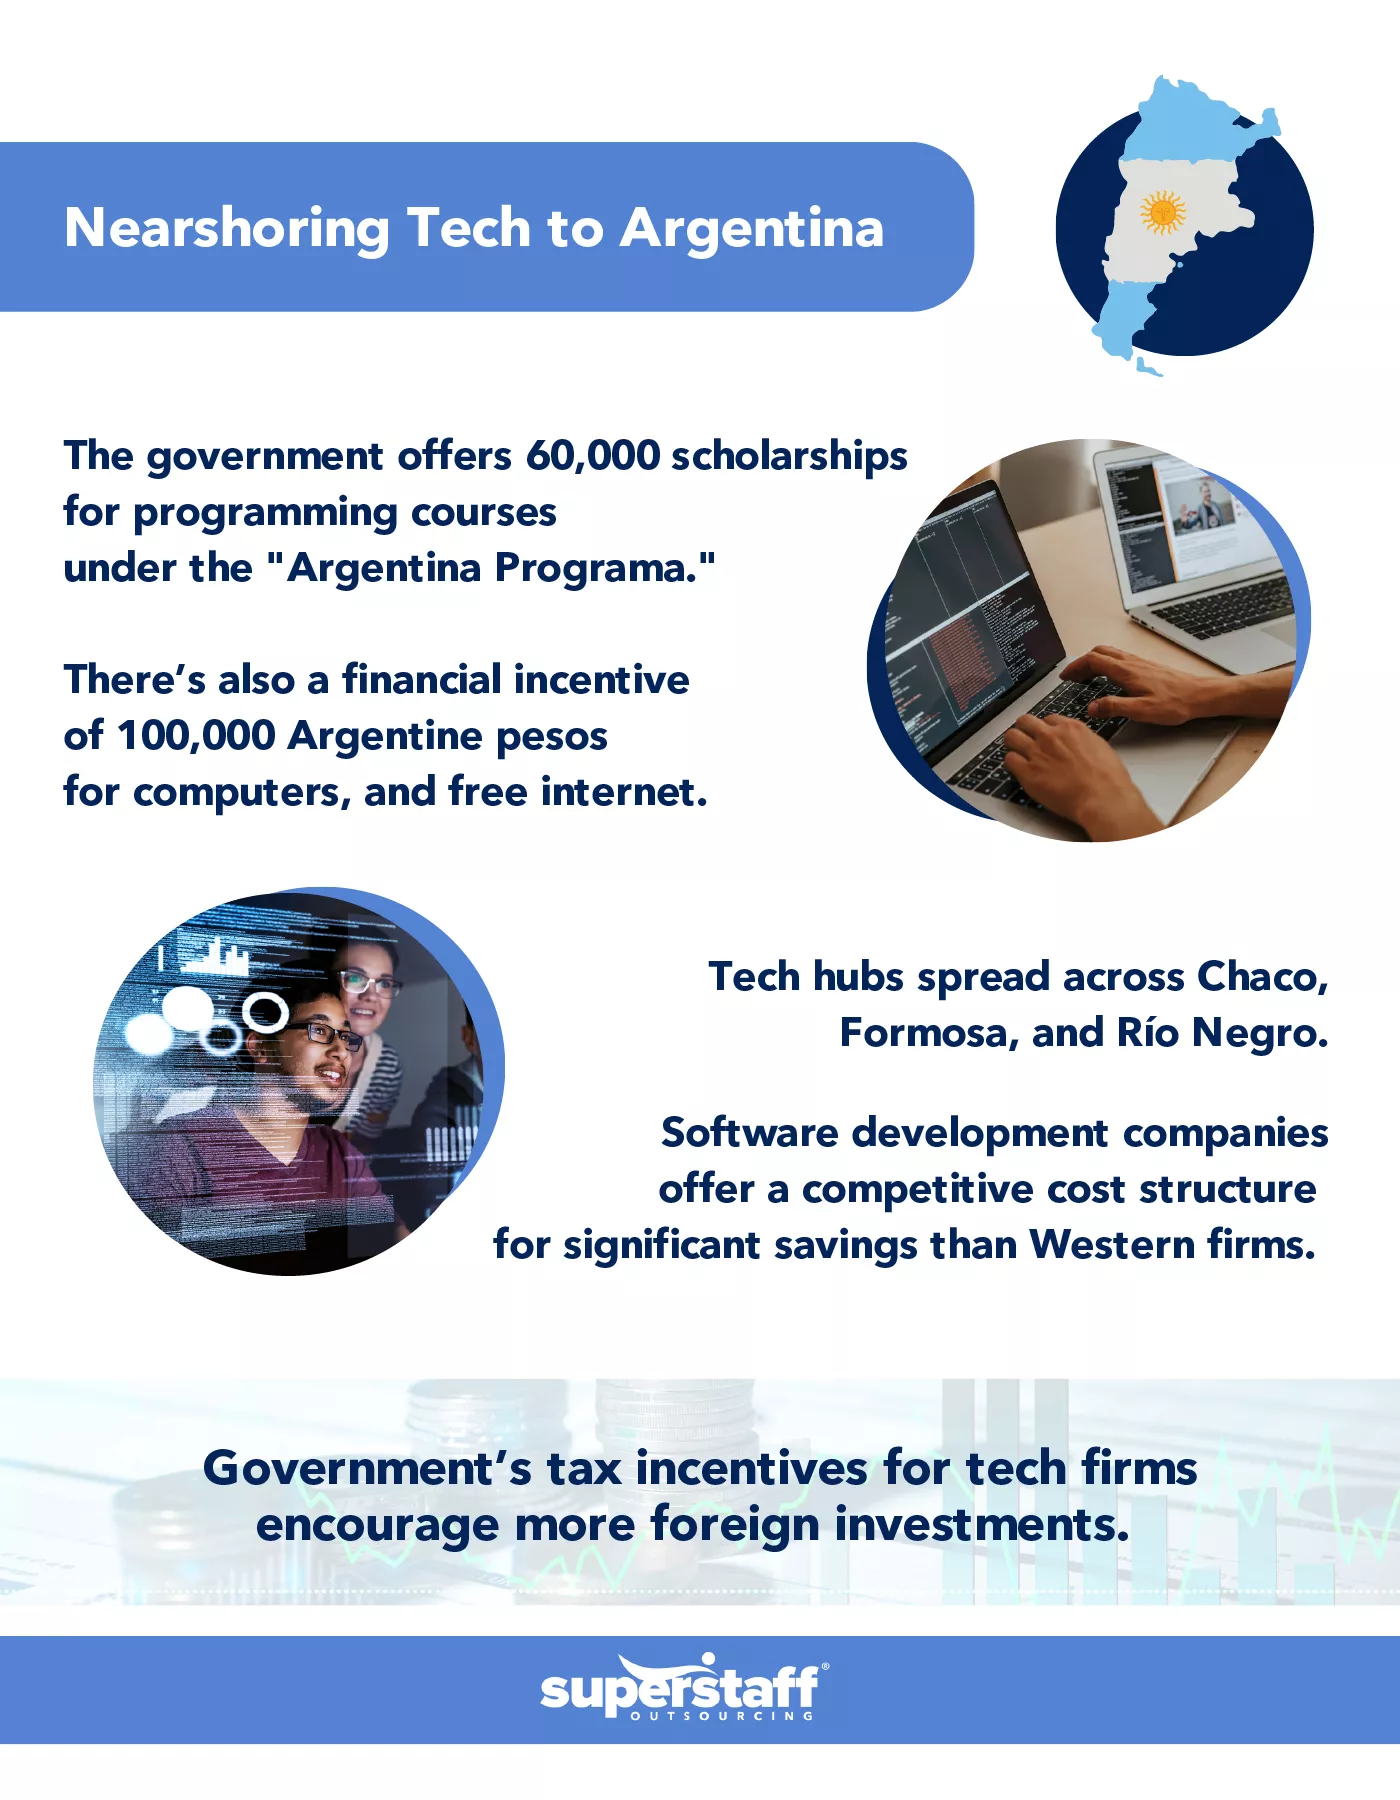 Neashoring tech to Argentina Banner